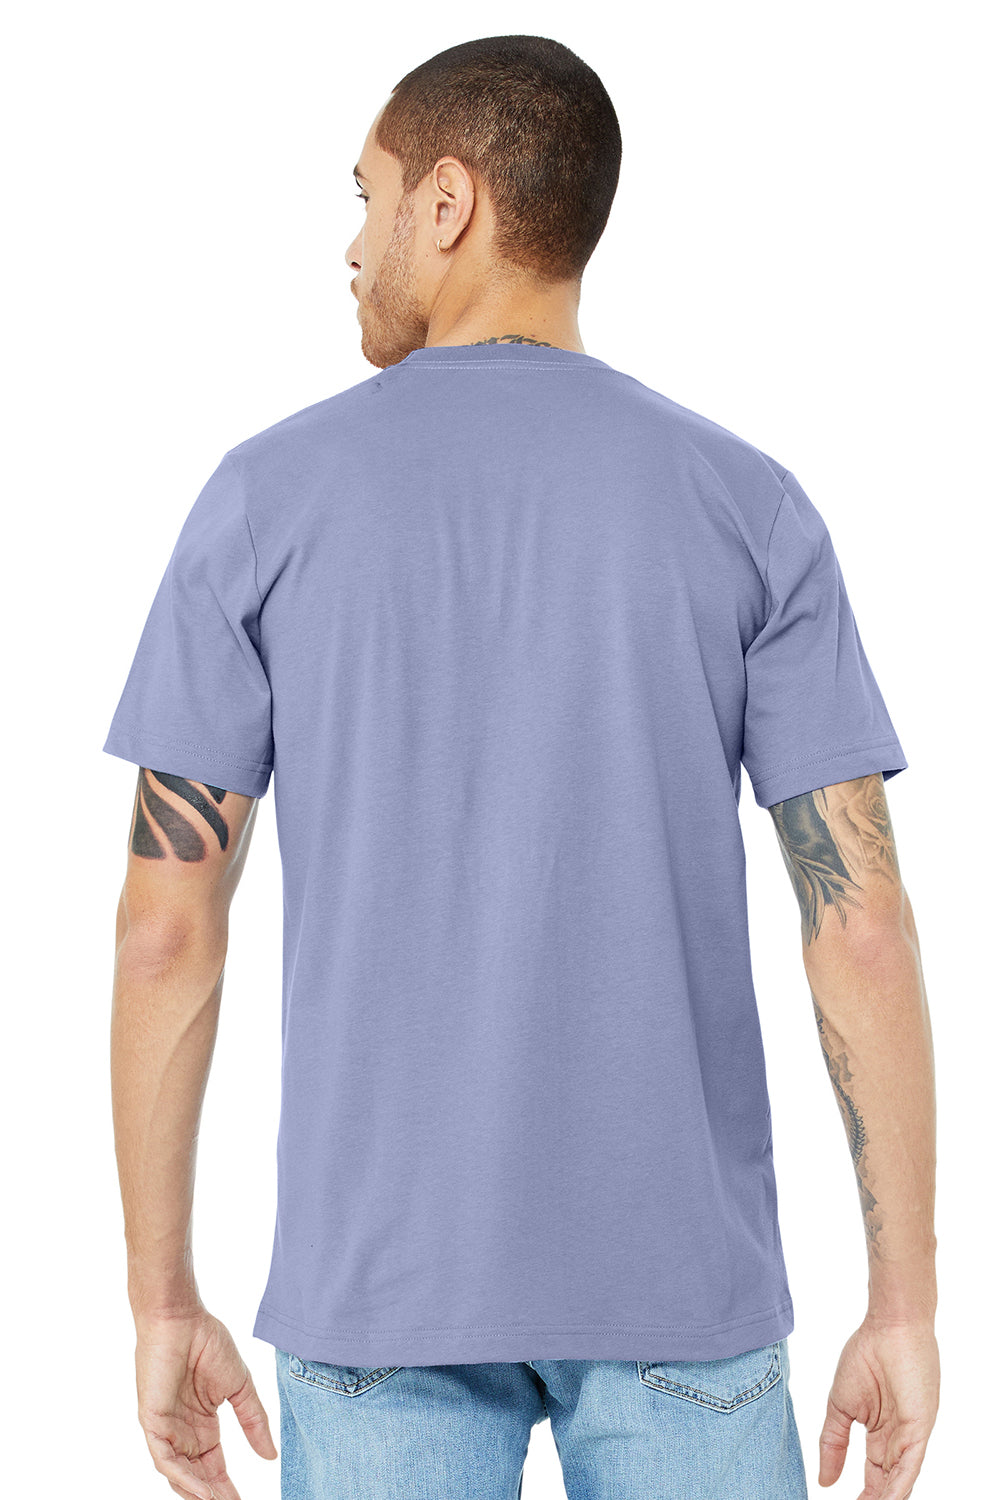 Bella + Canvas BC3001/3001C Mens Jersey Short Sleeve Crewneck T-Shirt Lavender Blue Model Back